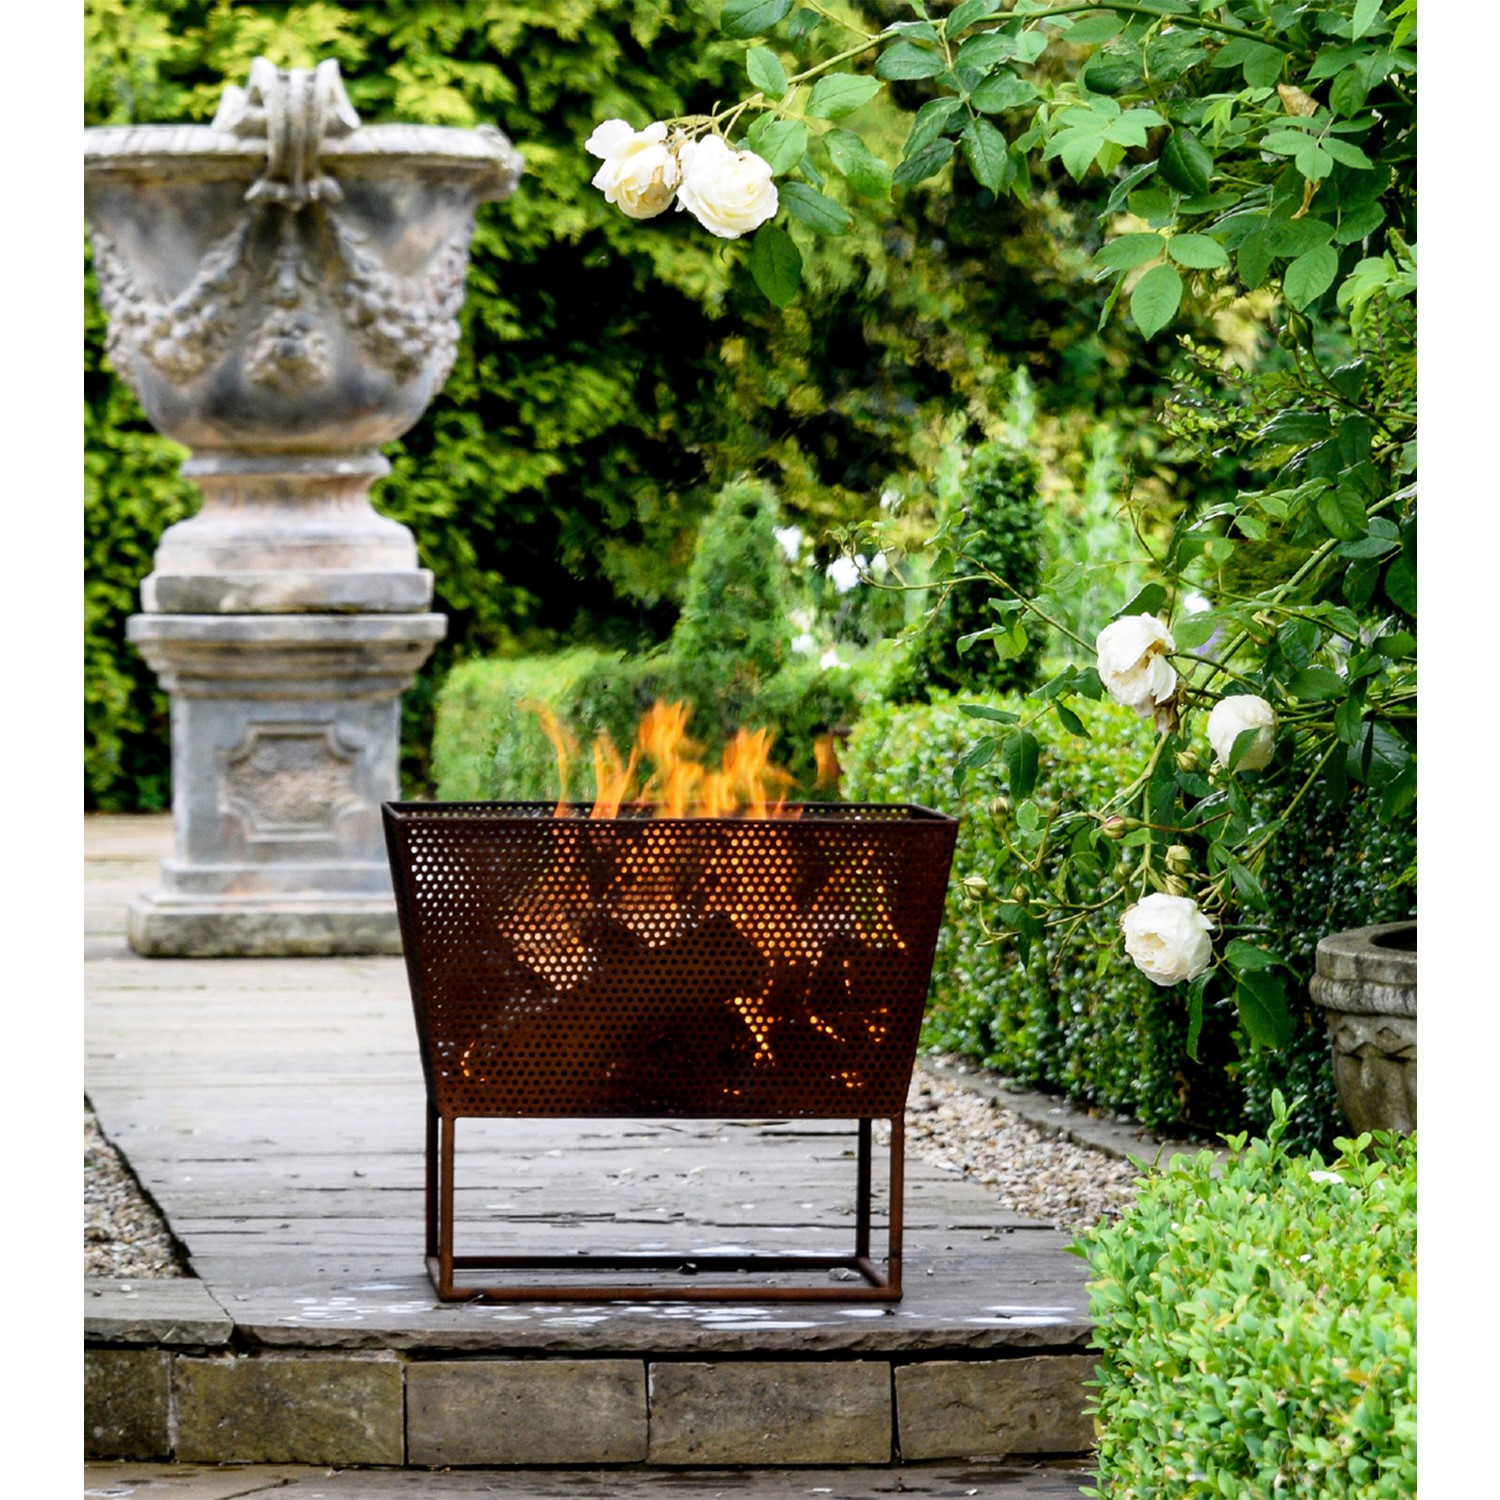 Read more about Ivyline outdoor norfolk firebowl rust iron